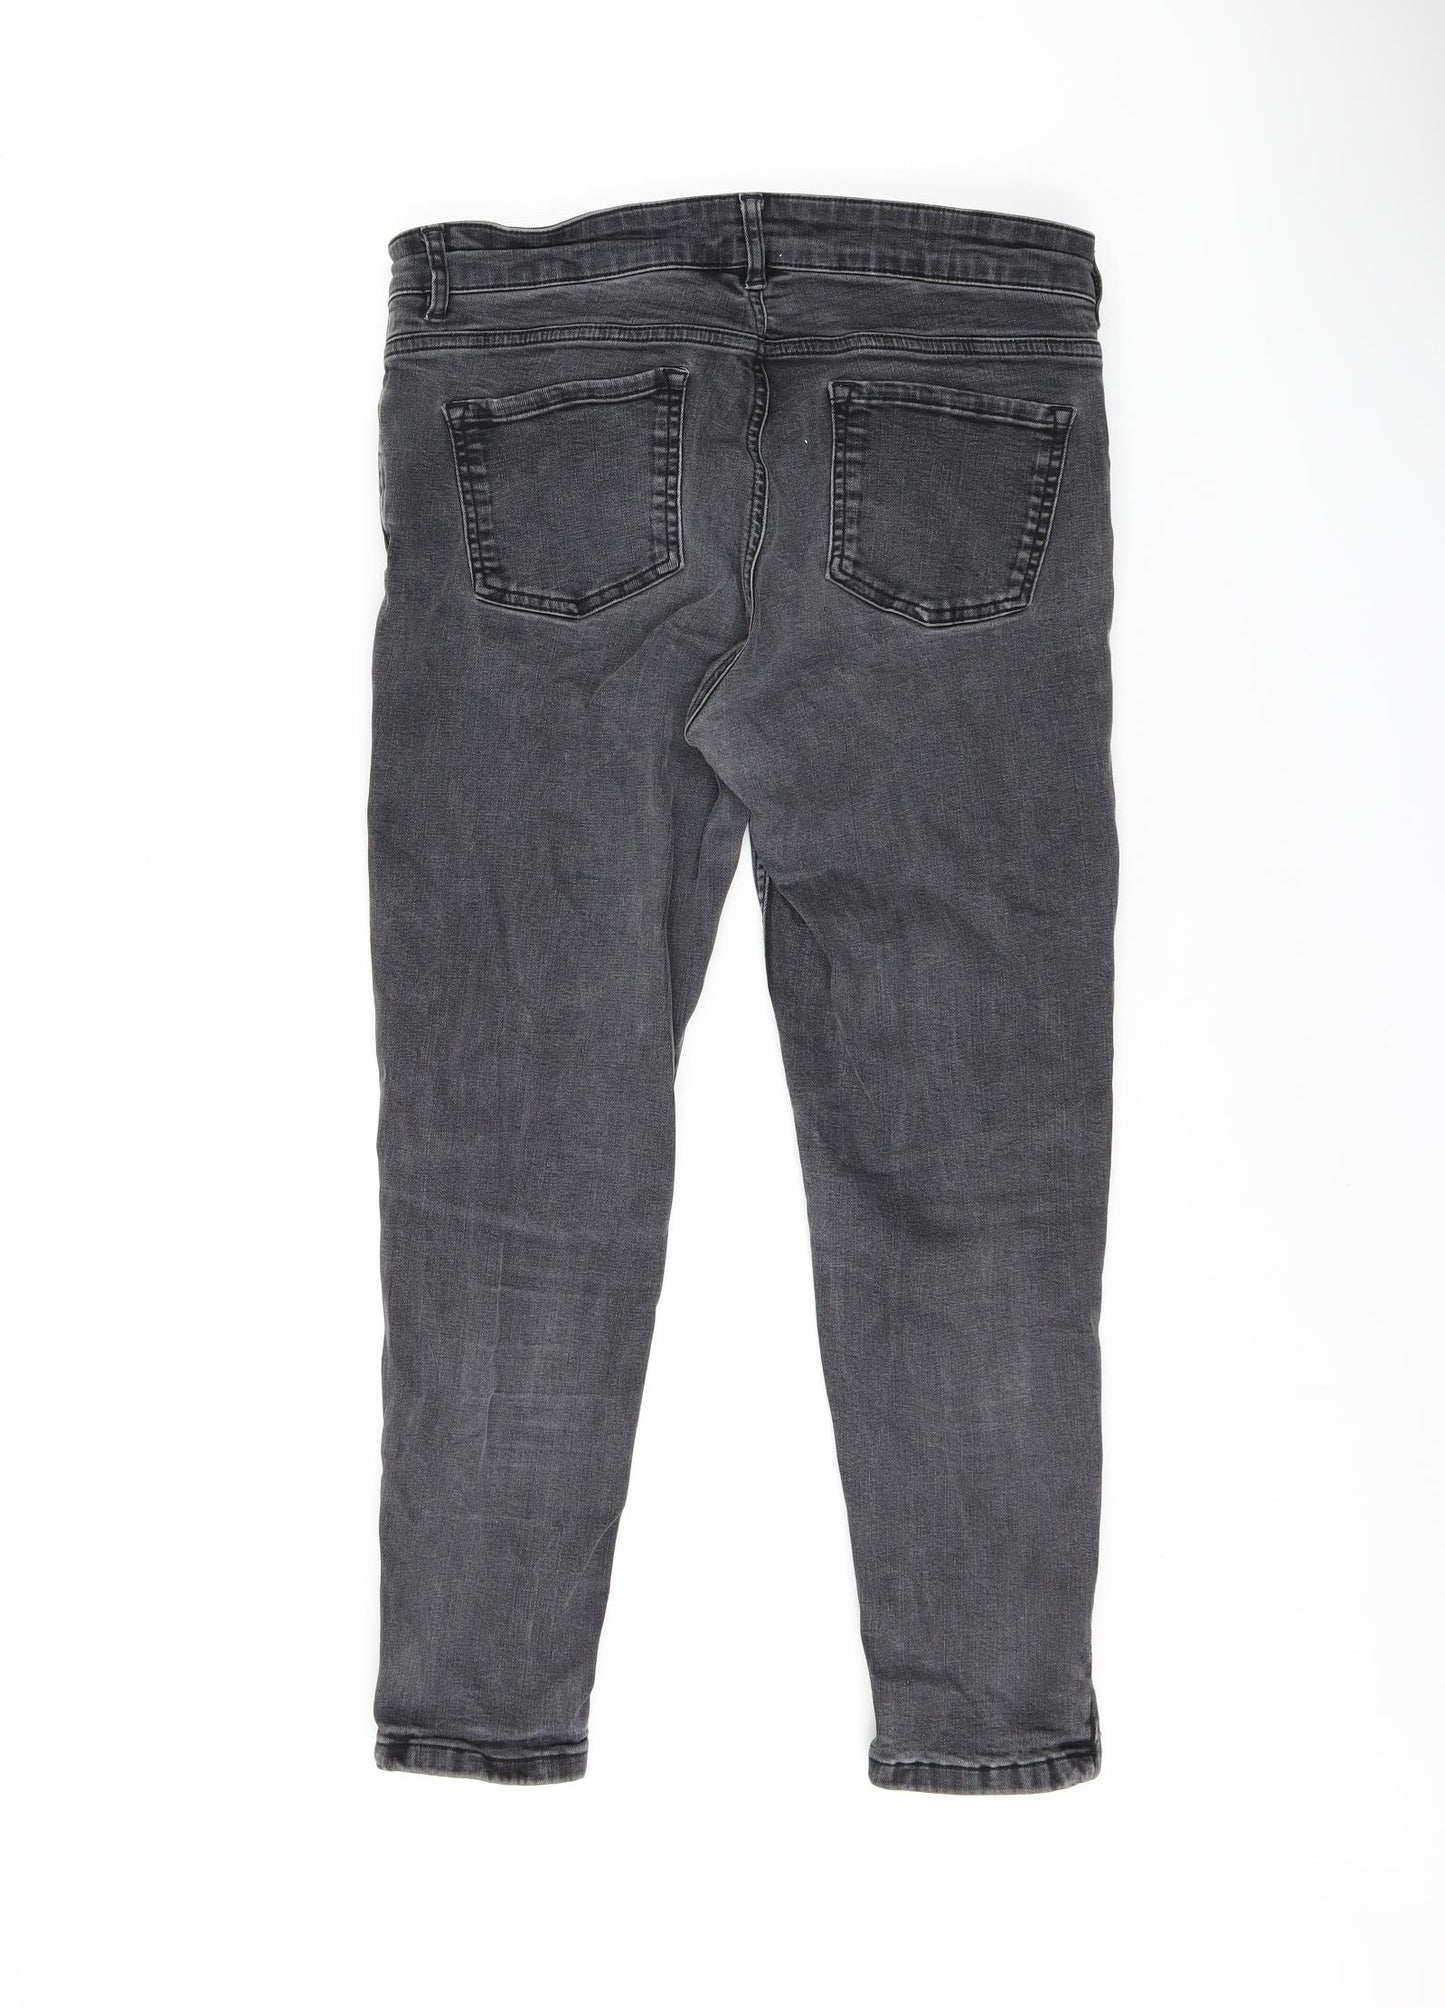 Oasis Womens Grey Cotton Skinny Jeans Size 12 L24 in Regular Zip